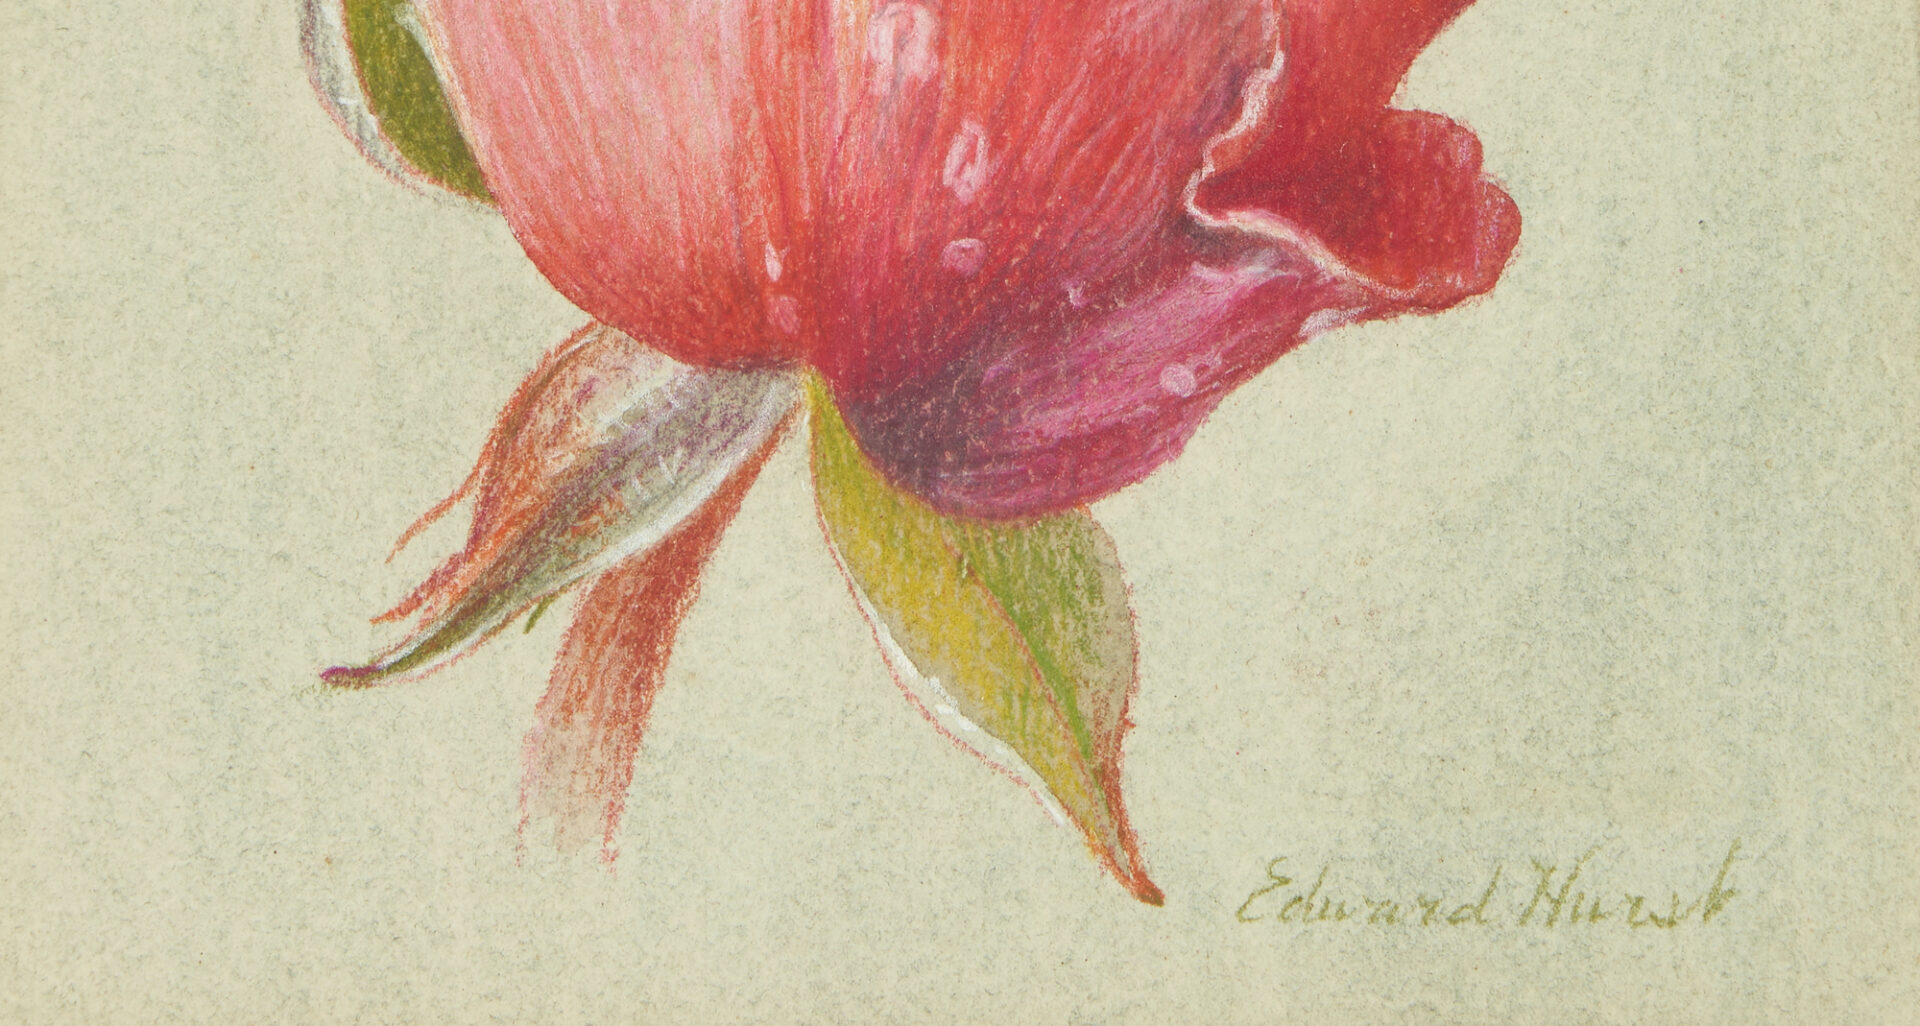 Lot 156: 3 Edward Hurst Pastel Works, Large Still Life & Botanical Studies